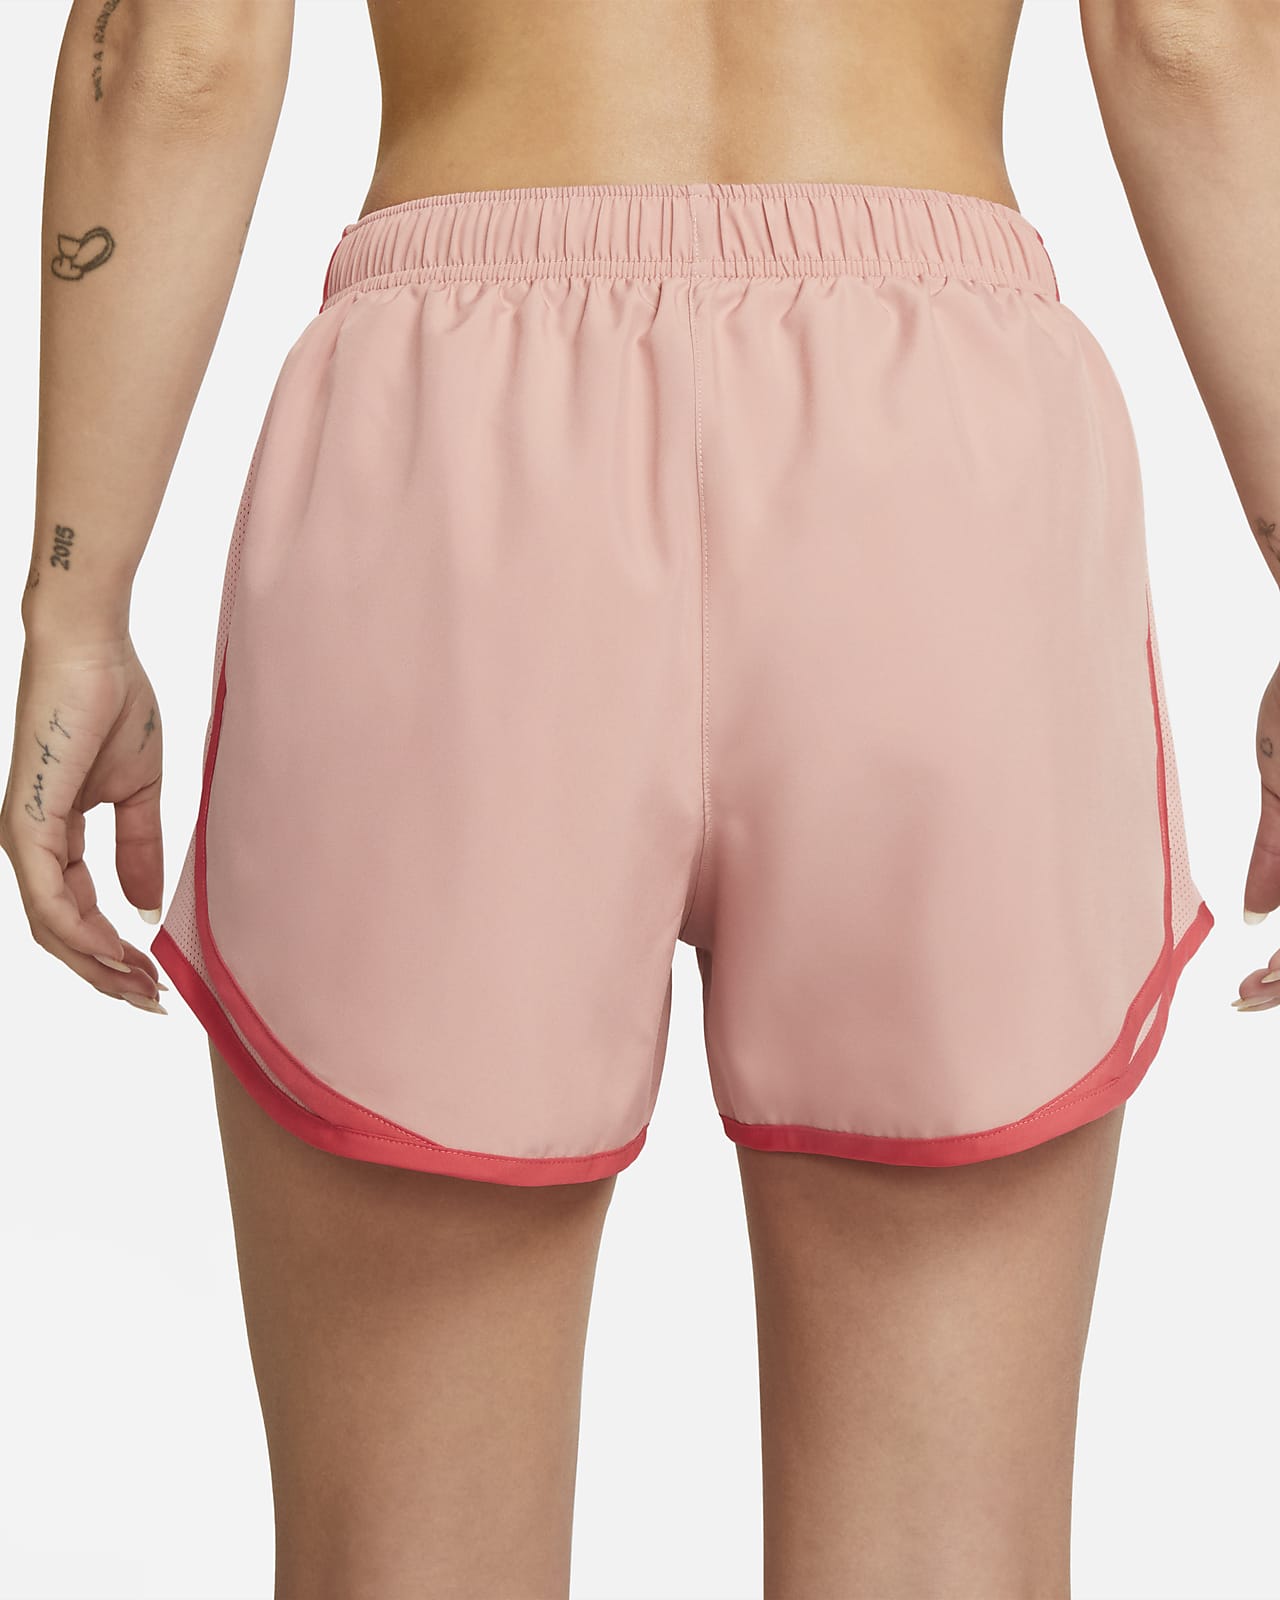  Nike Womens Dri FIT Stock Compression Shorts (X-Small